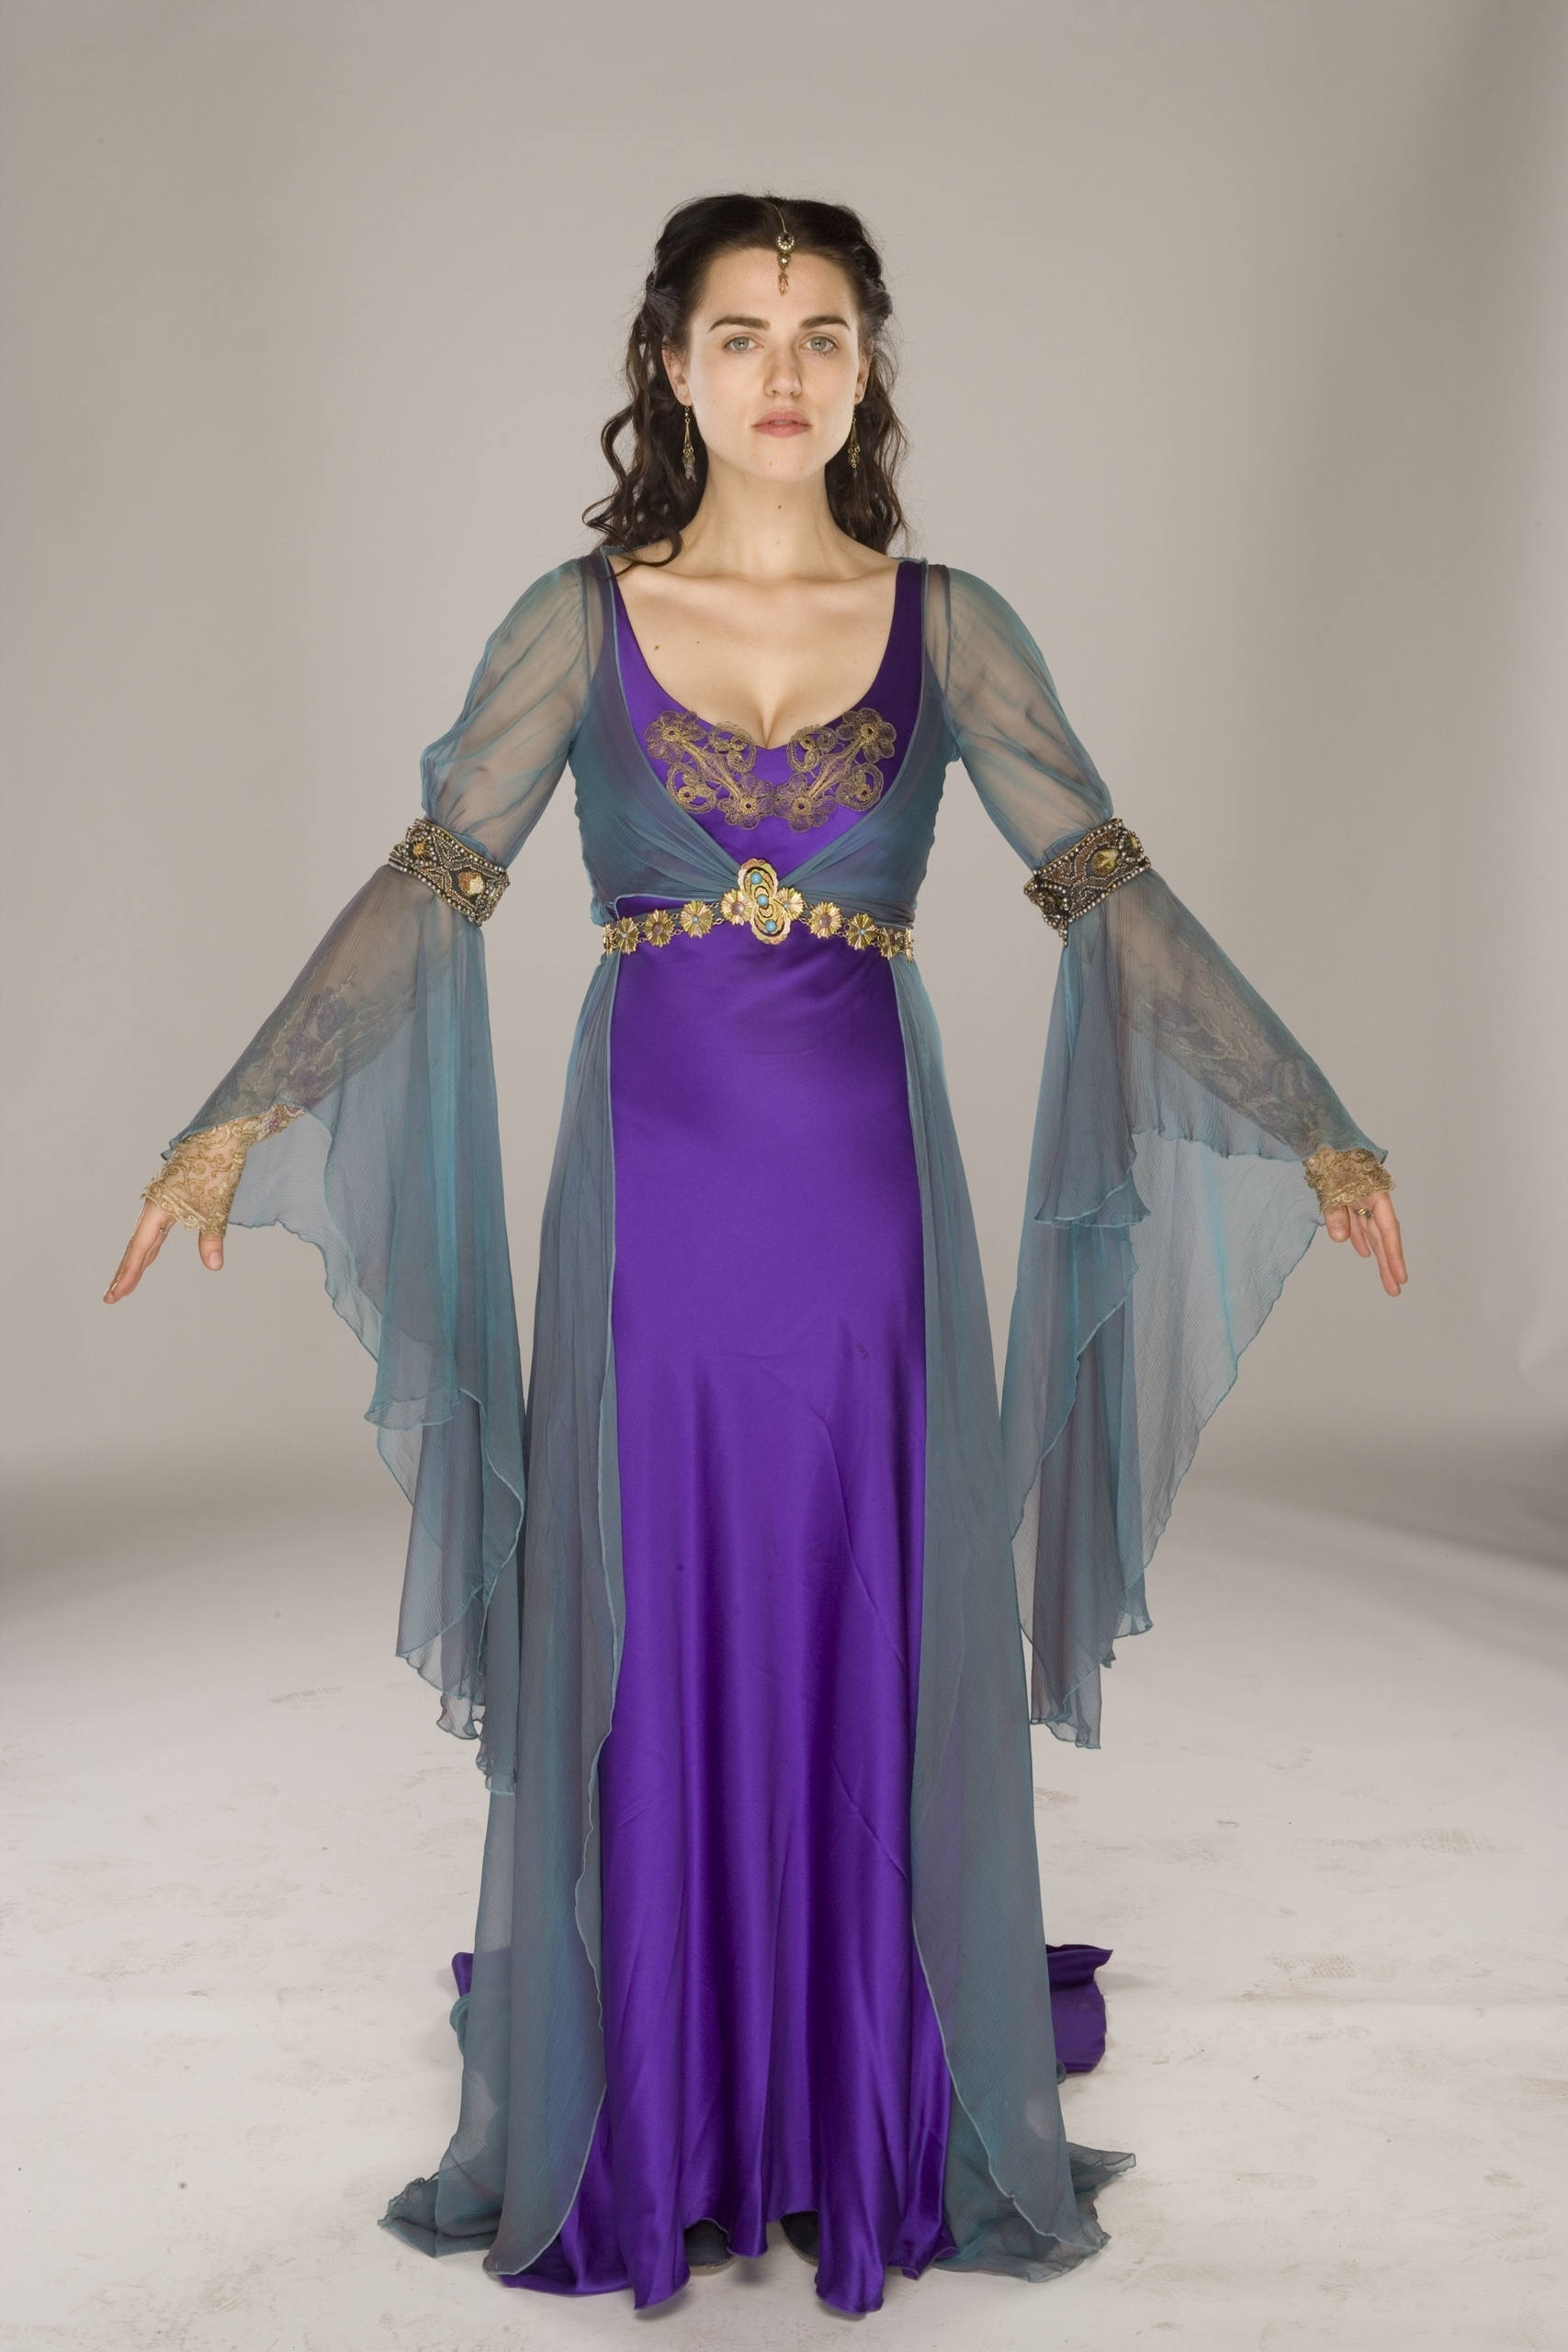 Lady Morgana Season 1 - Merlin on BBC Photo (31375595) - Fanpop